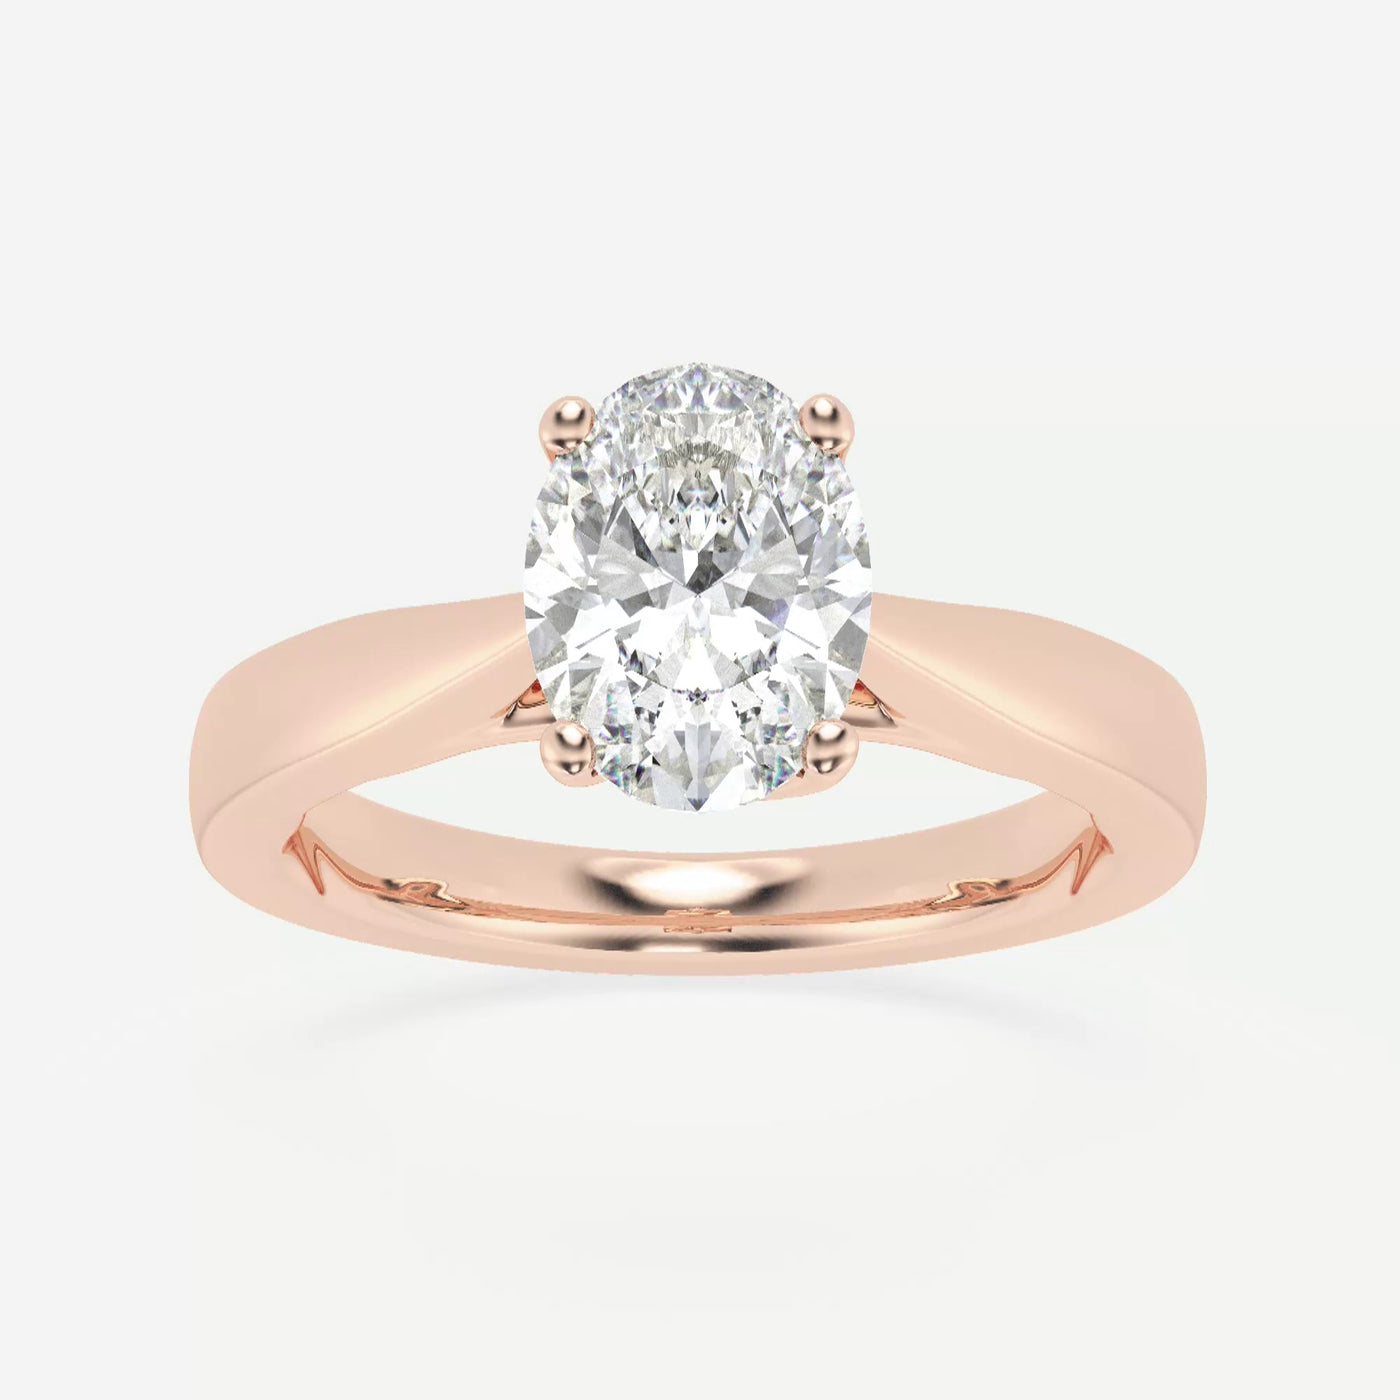 _main_image@SKU:LGD-TXR01766-GP4~#carat_1.50#diamond-quality_fg,-vs2+#metal_18k-rose-gold